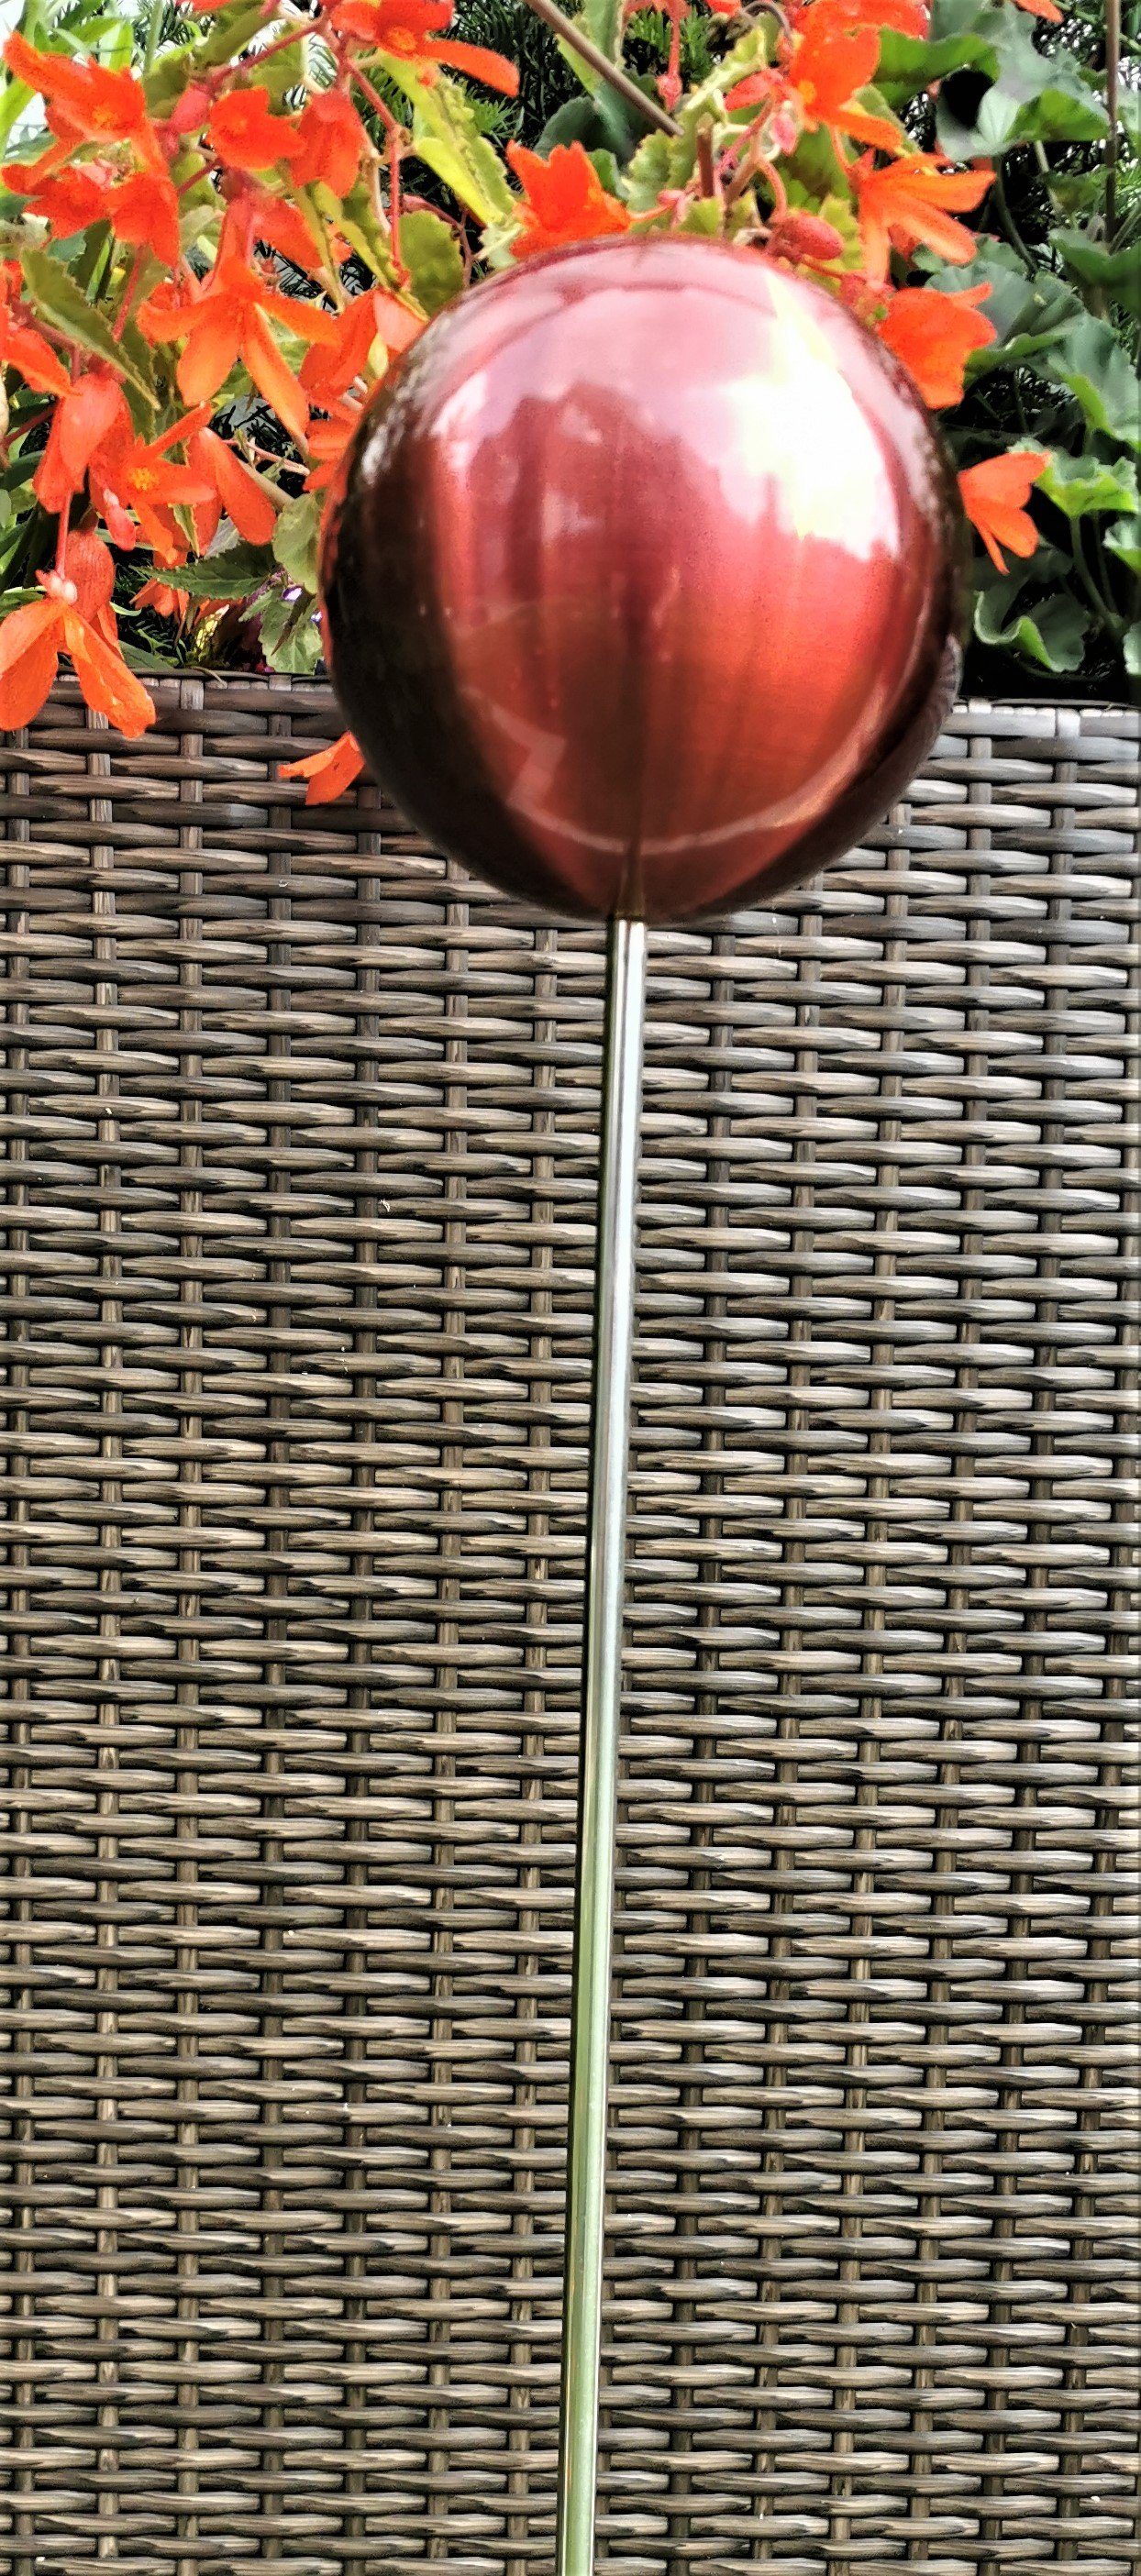 Jürgen Bocker Garten-Ambiente Gartenstecker Rosenkugel Edelstahl rot matt gebürstet verschiedenen Größen Dekokugel Kugel mit Stab 80 cm Gartenstecker Rosenstecker Beetstecker Dekostecker